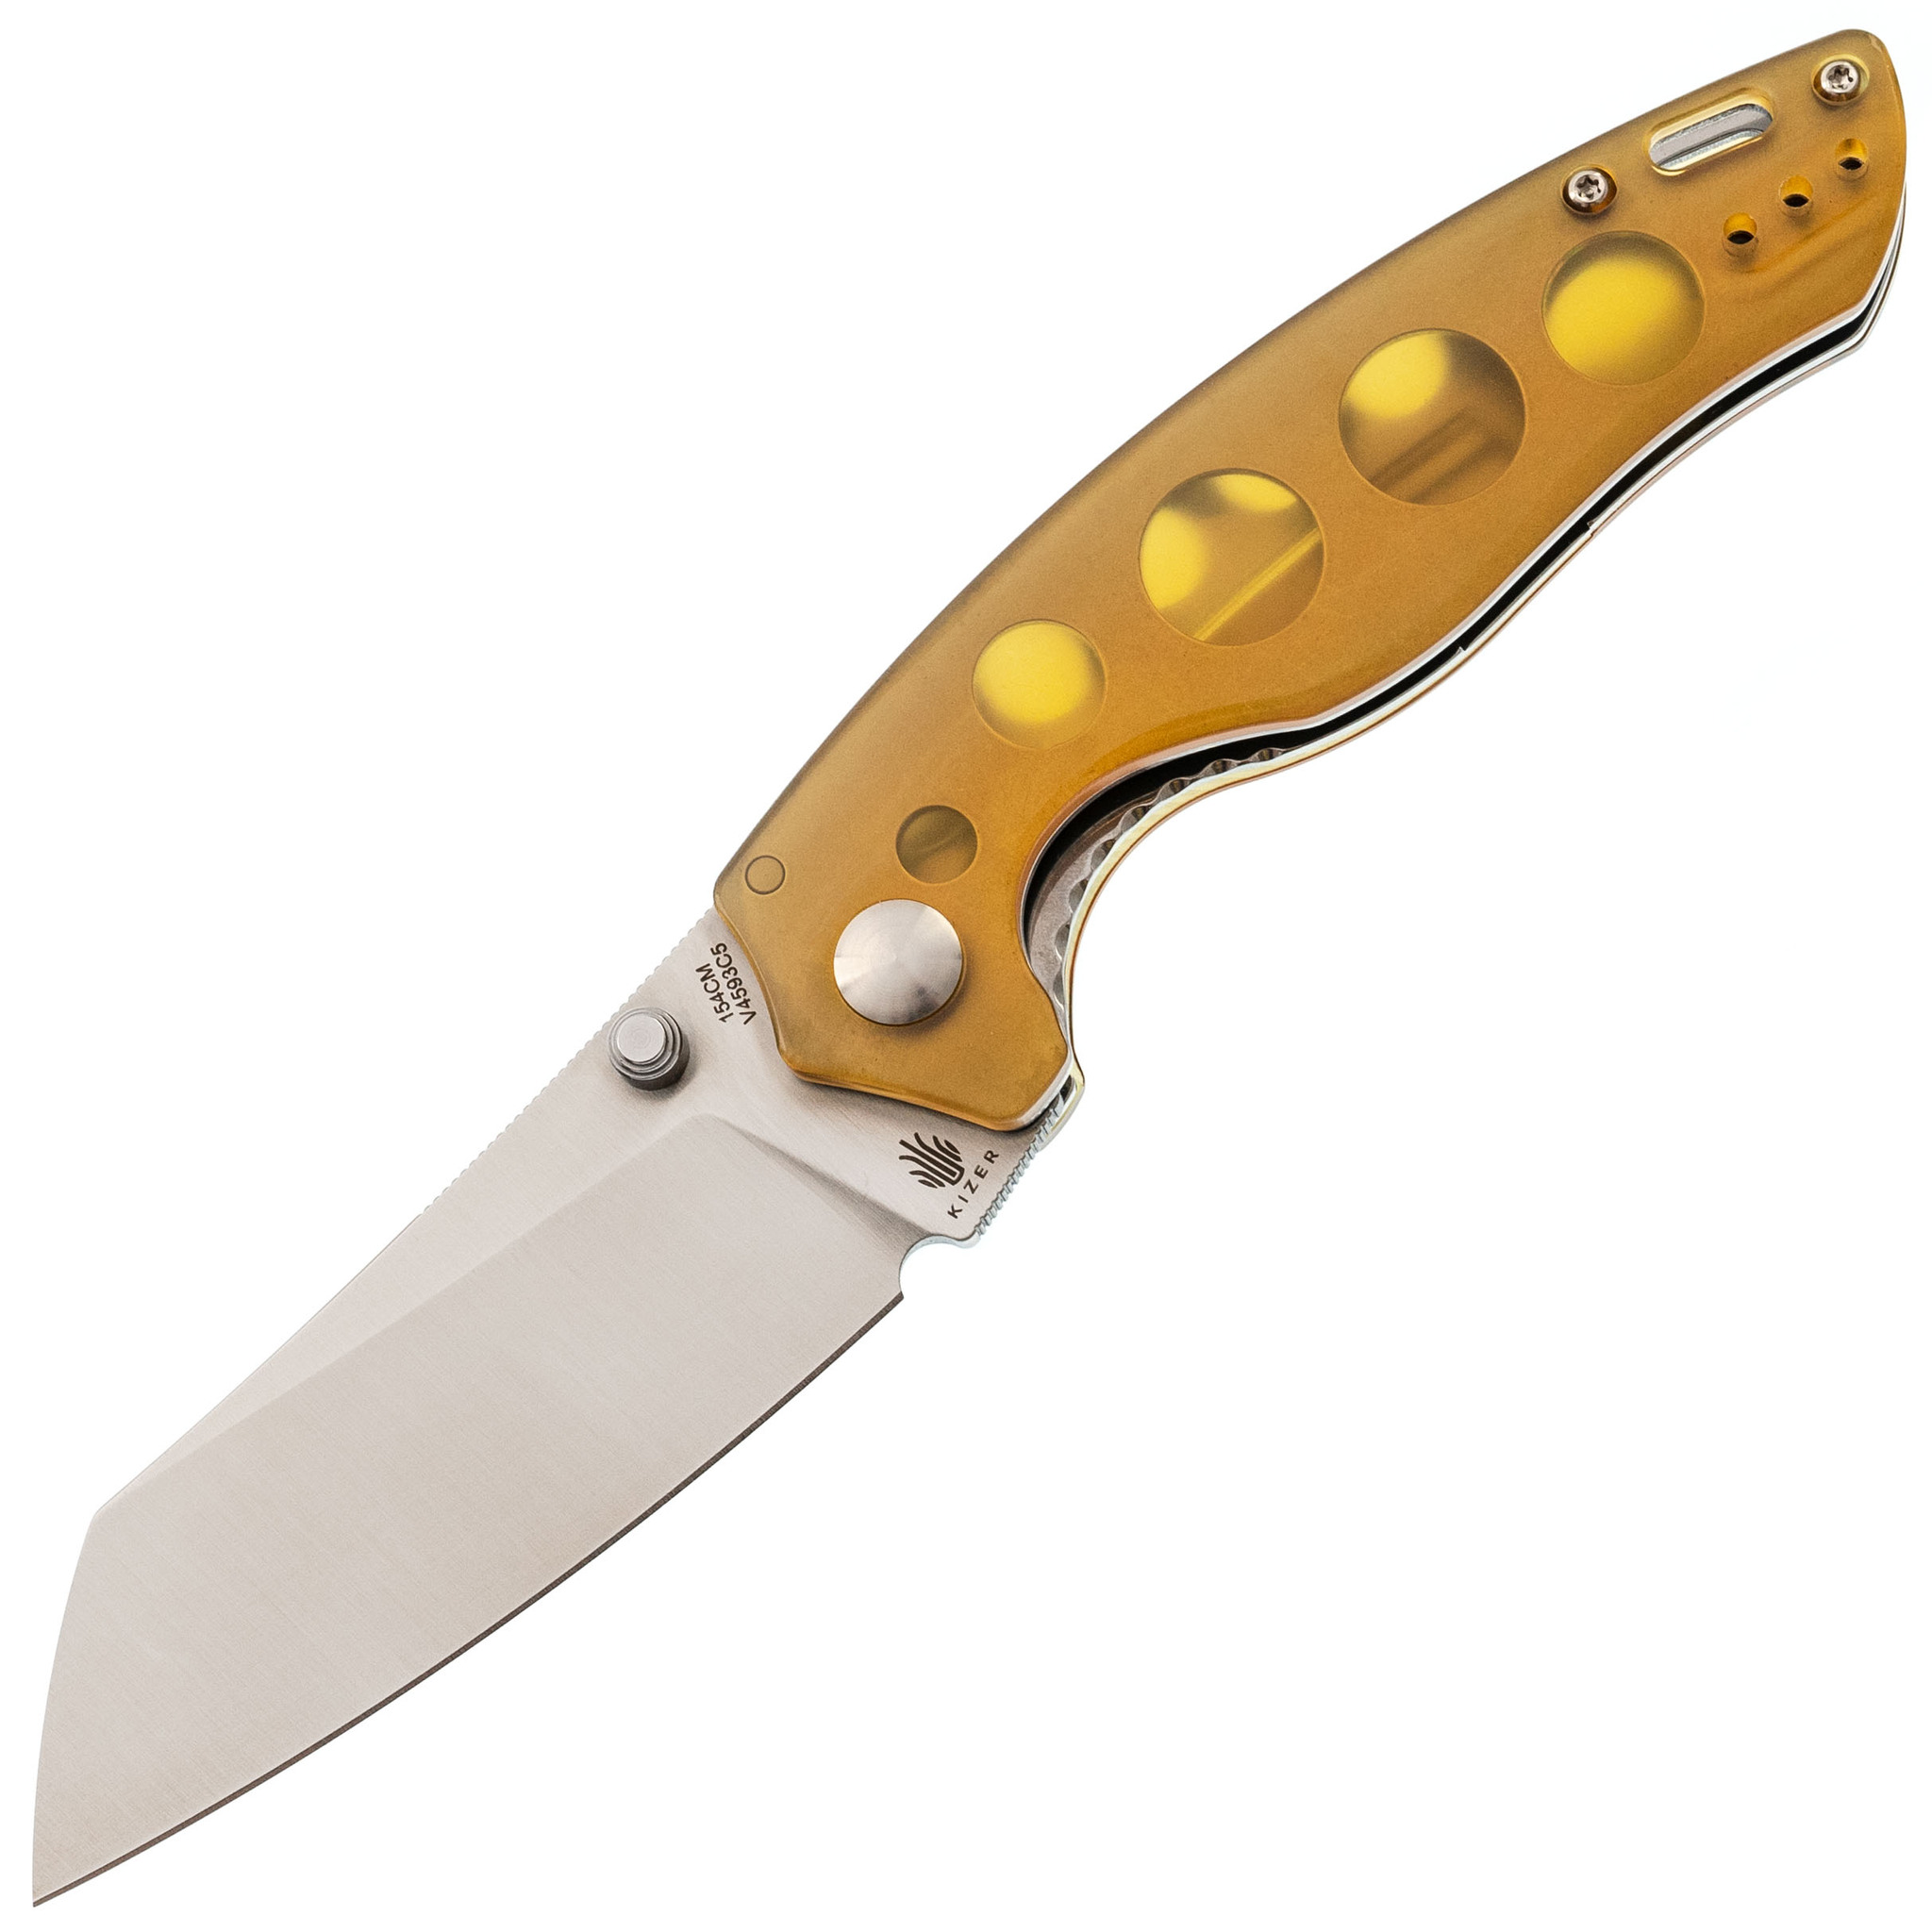 Складной нож Kizer Towser K, сталь 154CM, рукоять PEI, желтый - фото 1